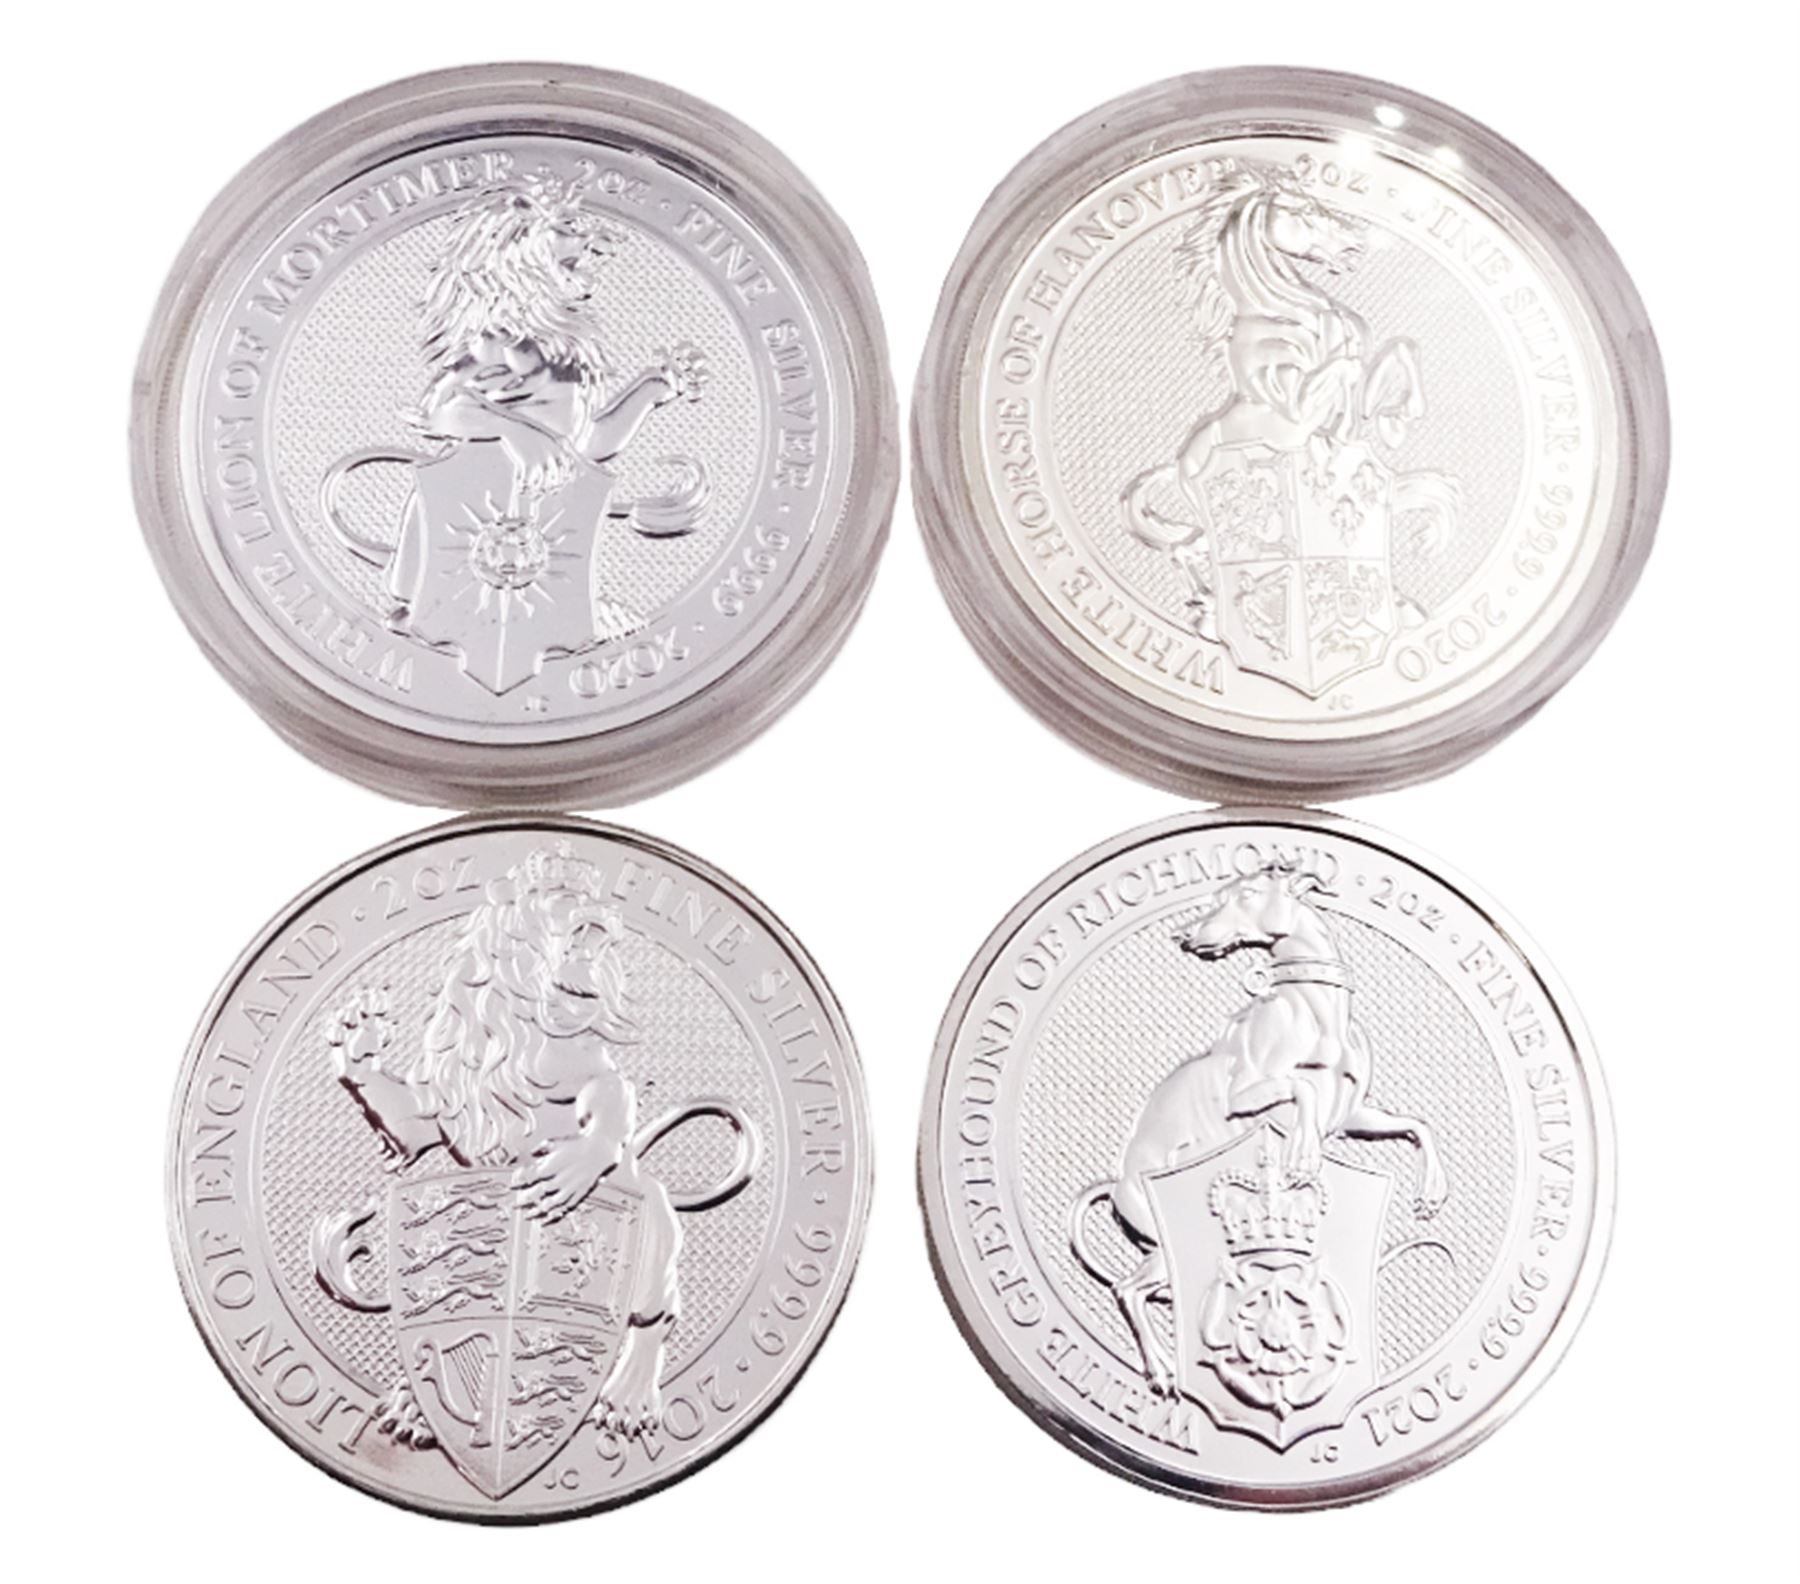 Four Queen Elizabeth II 2 ounce fine silver five pound coins